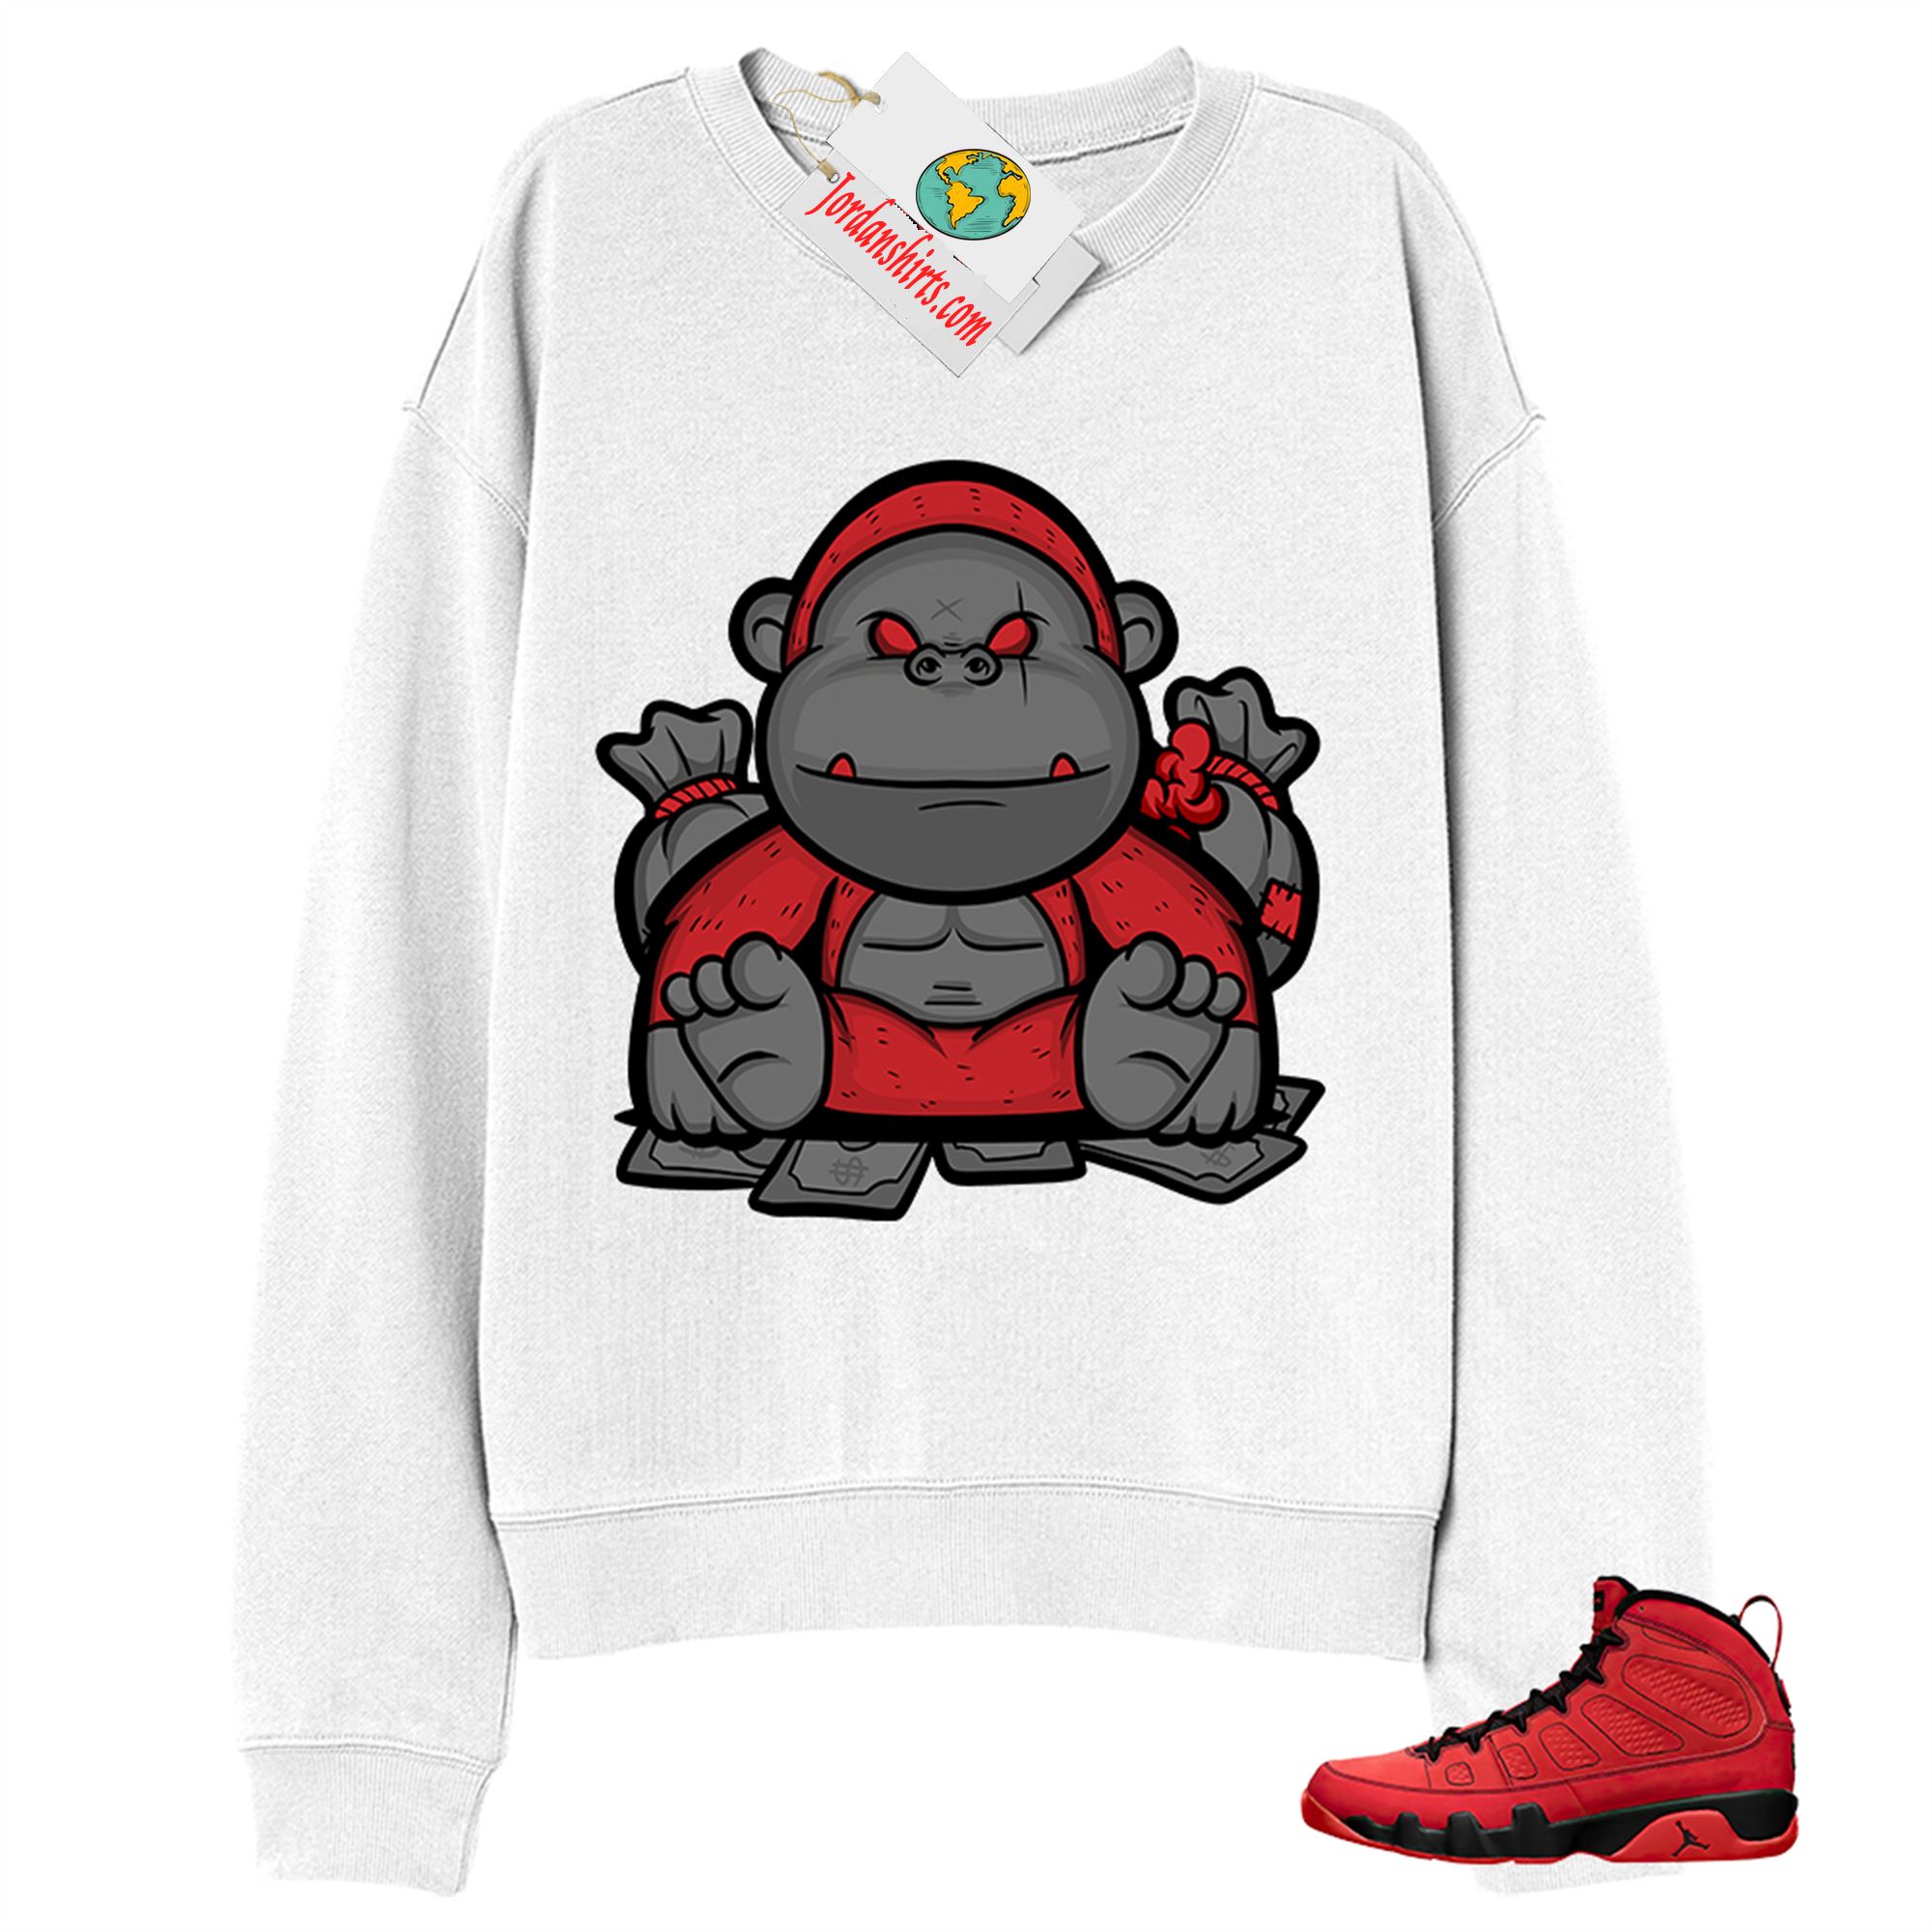 Jordan 9 Sweatshirt, Rich Gorilla With Money White Sweatshirt Air Jordan 9 Chile Red 9s Size Up To 5xl